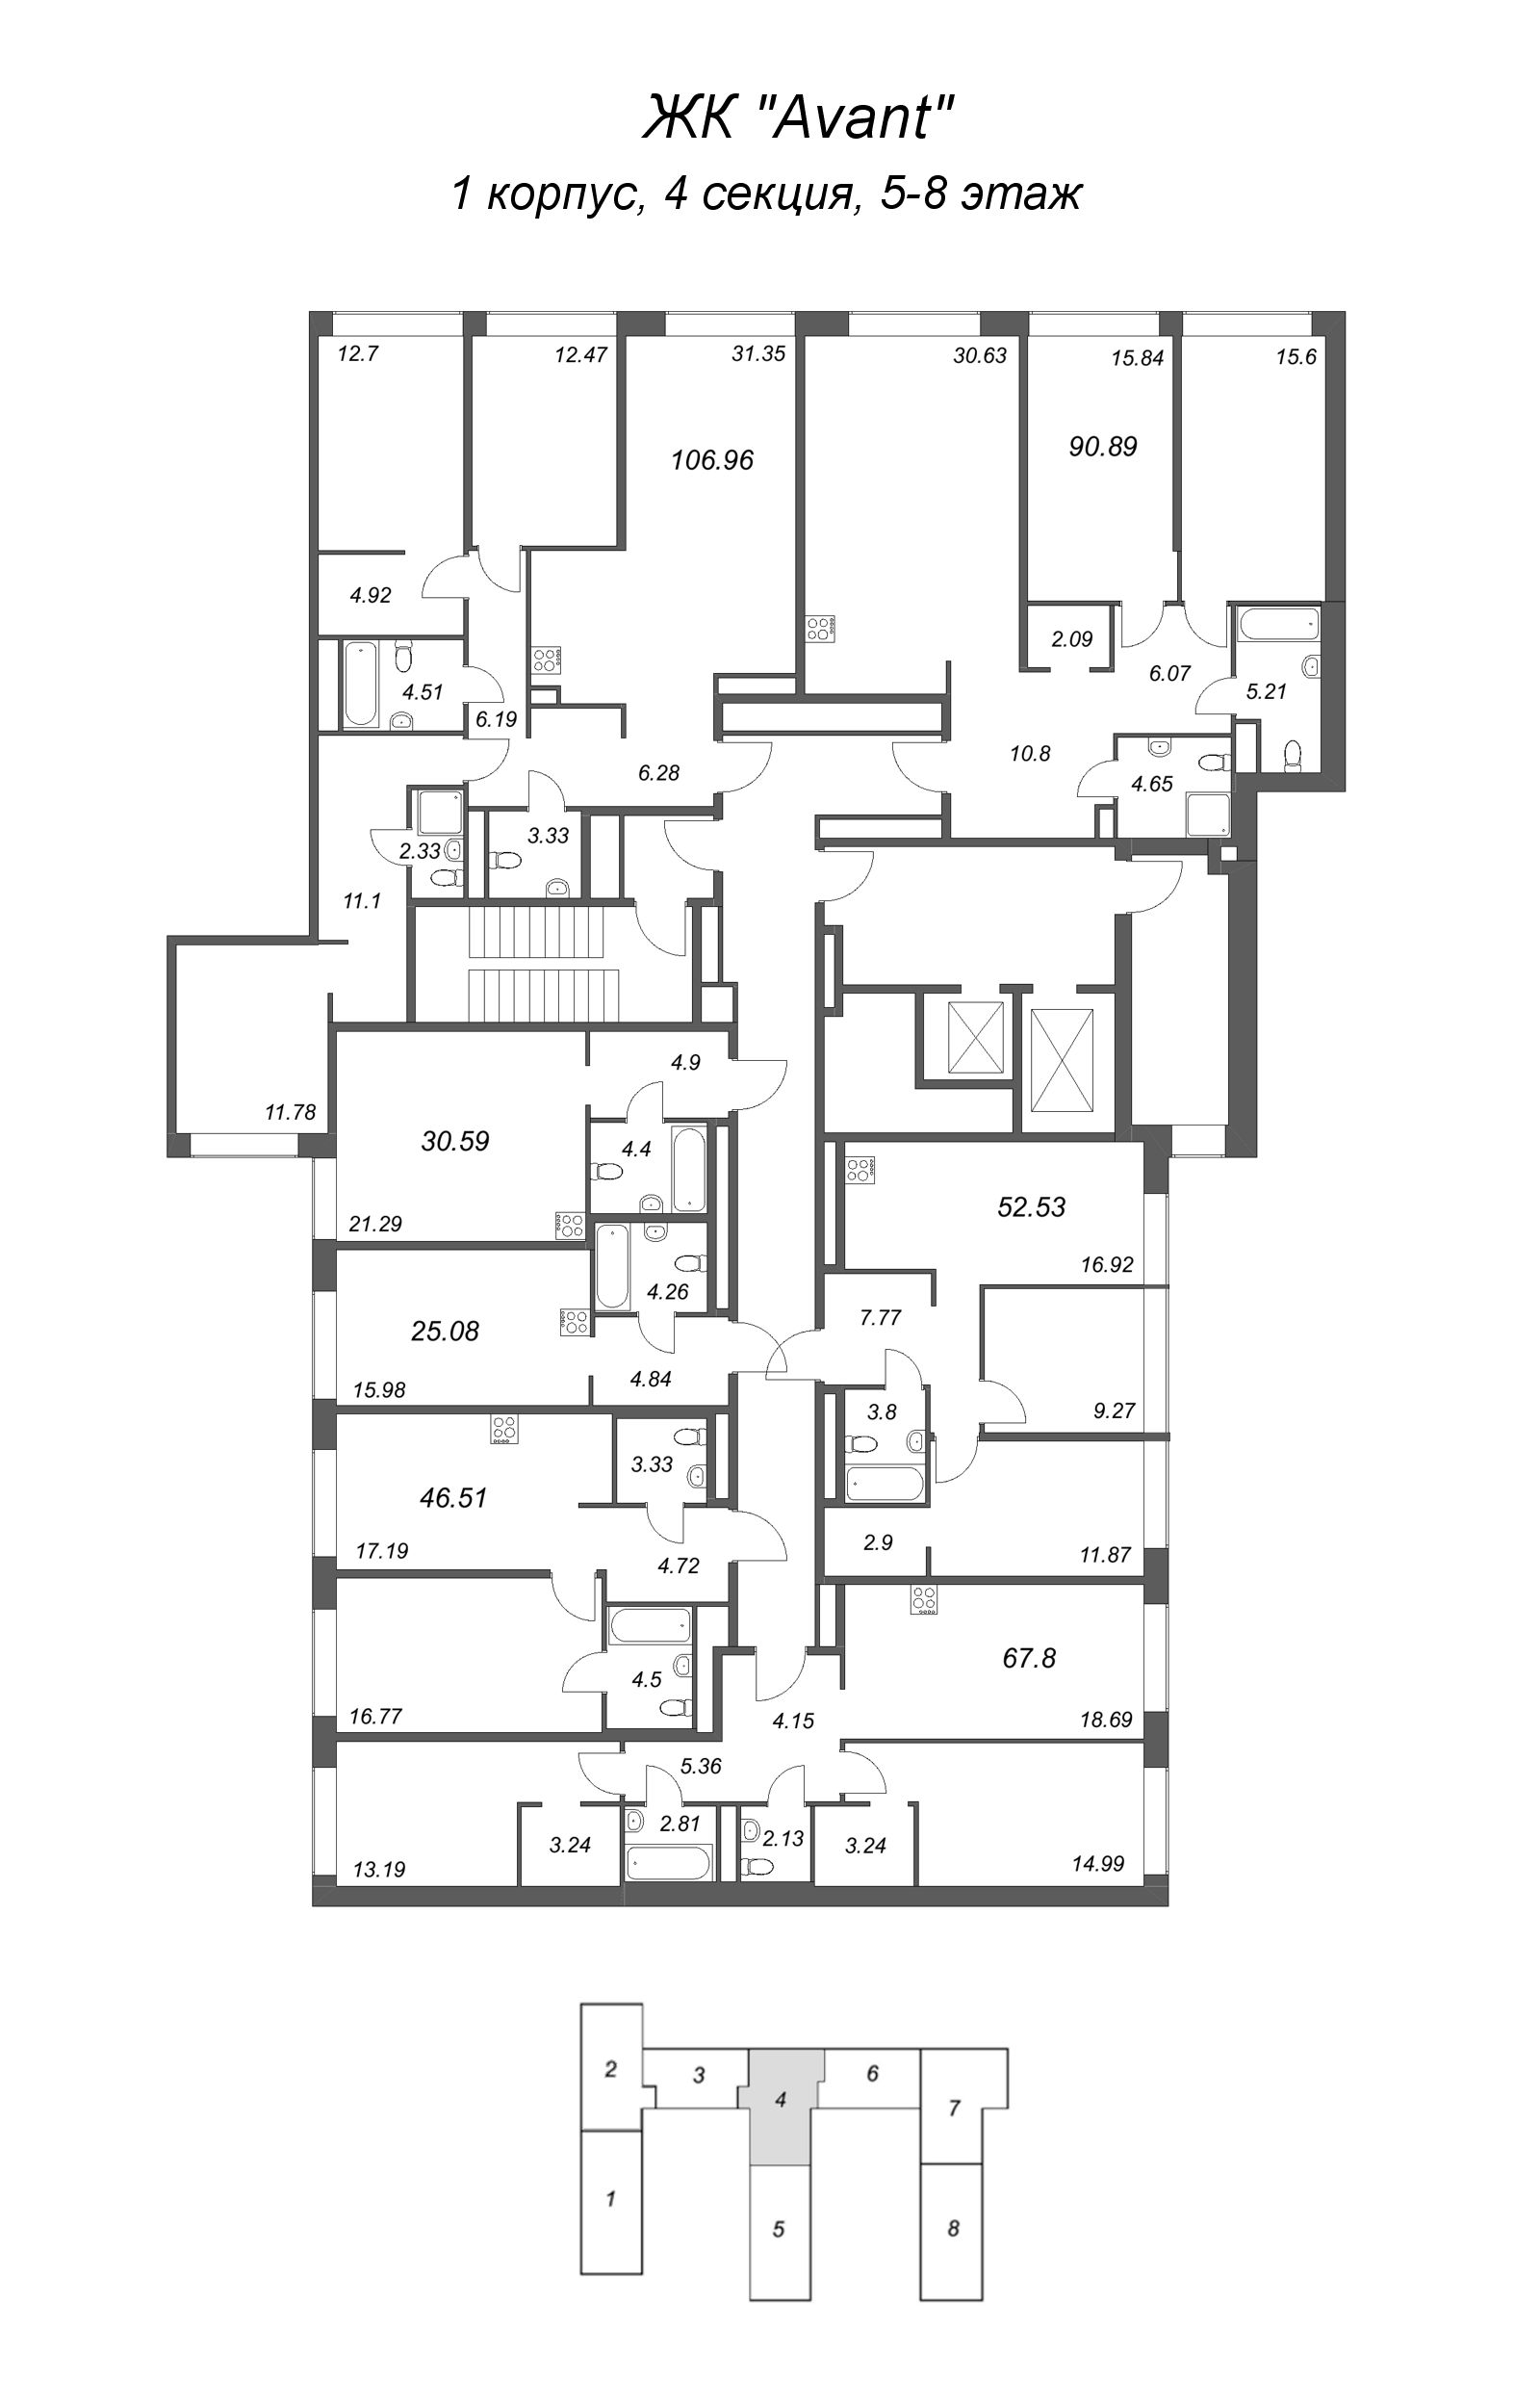 3-комнатная (Евро) квартира, 52.53 м² в ЖК "Avant" - планировка этажа